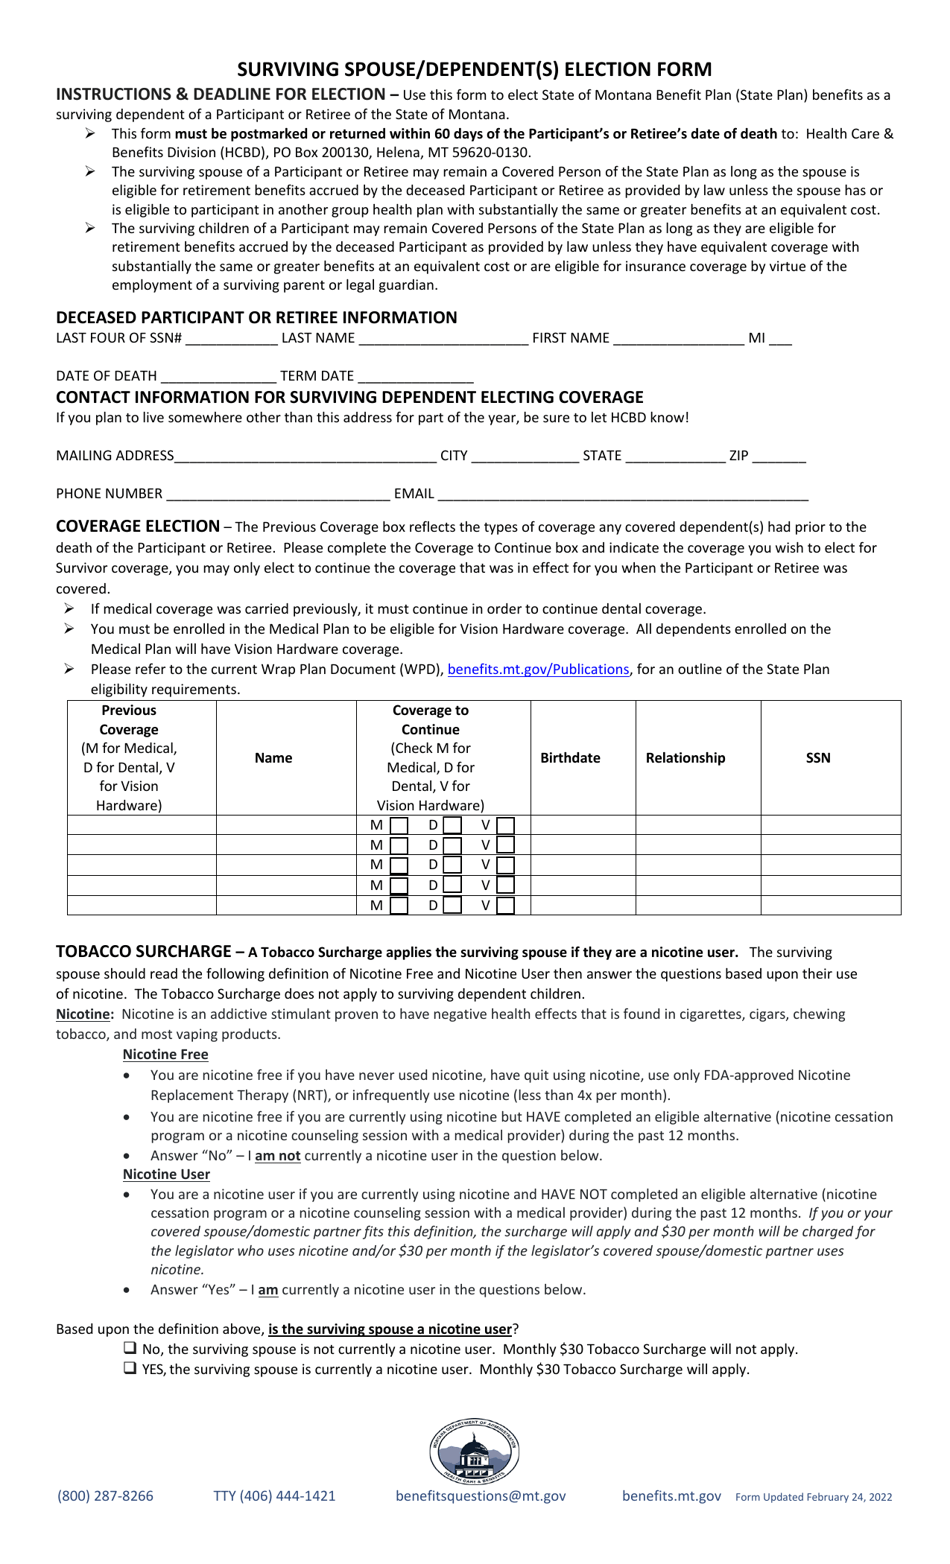 Surviving Spouse / Dependent(s) Election Form - Montana, Page 1